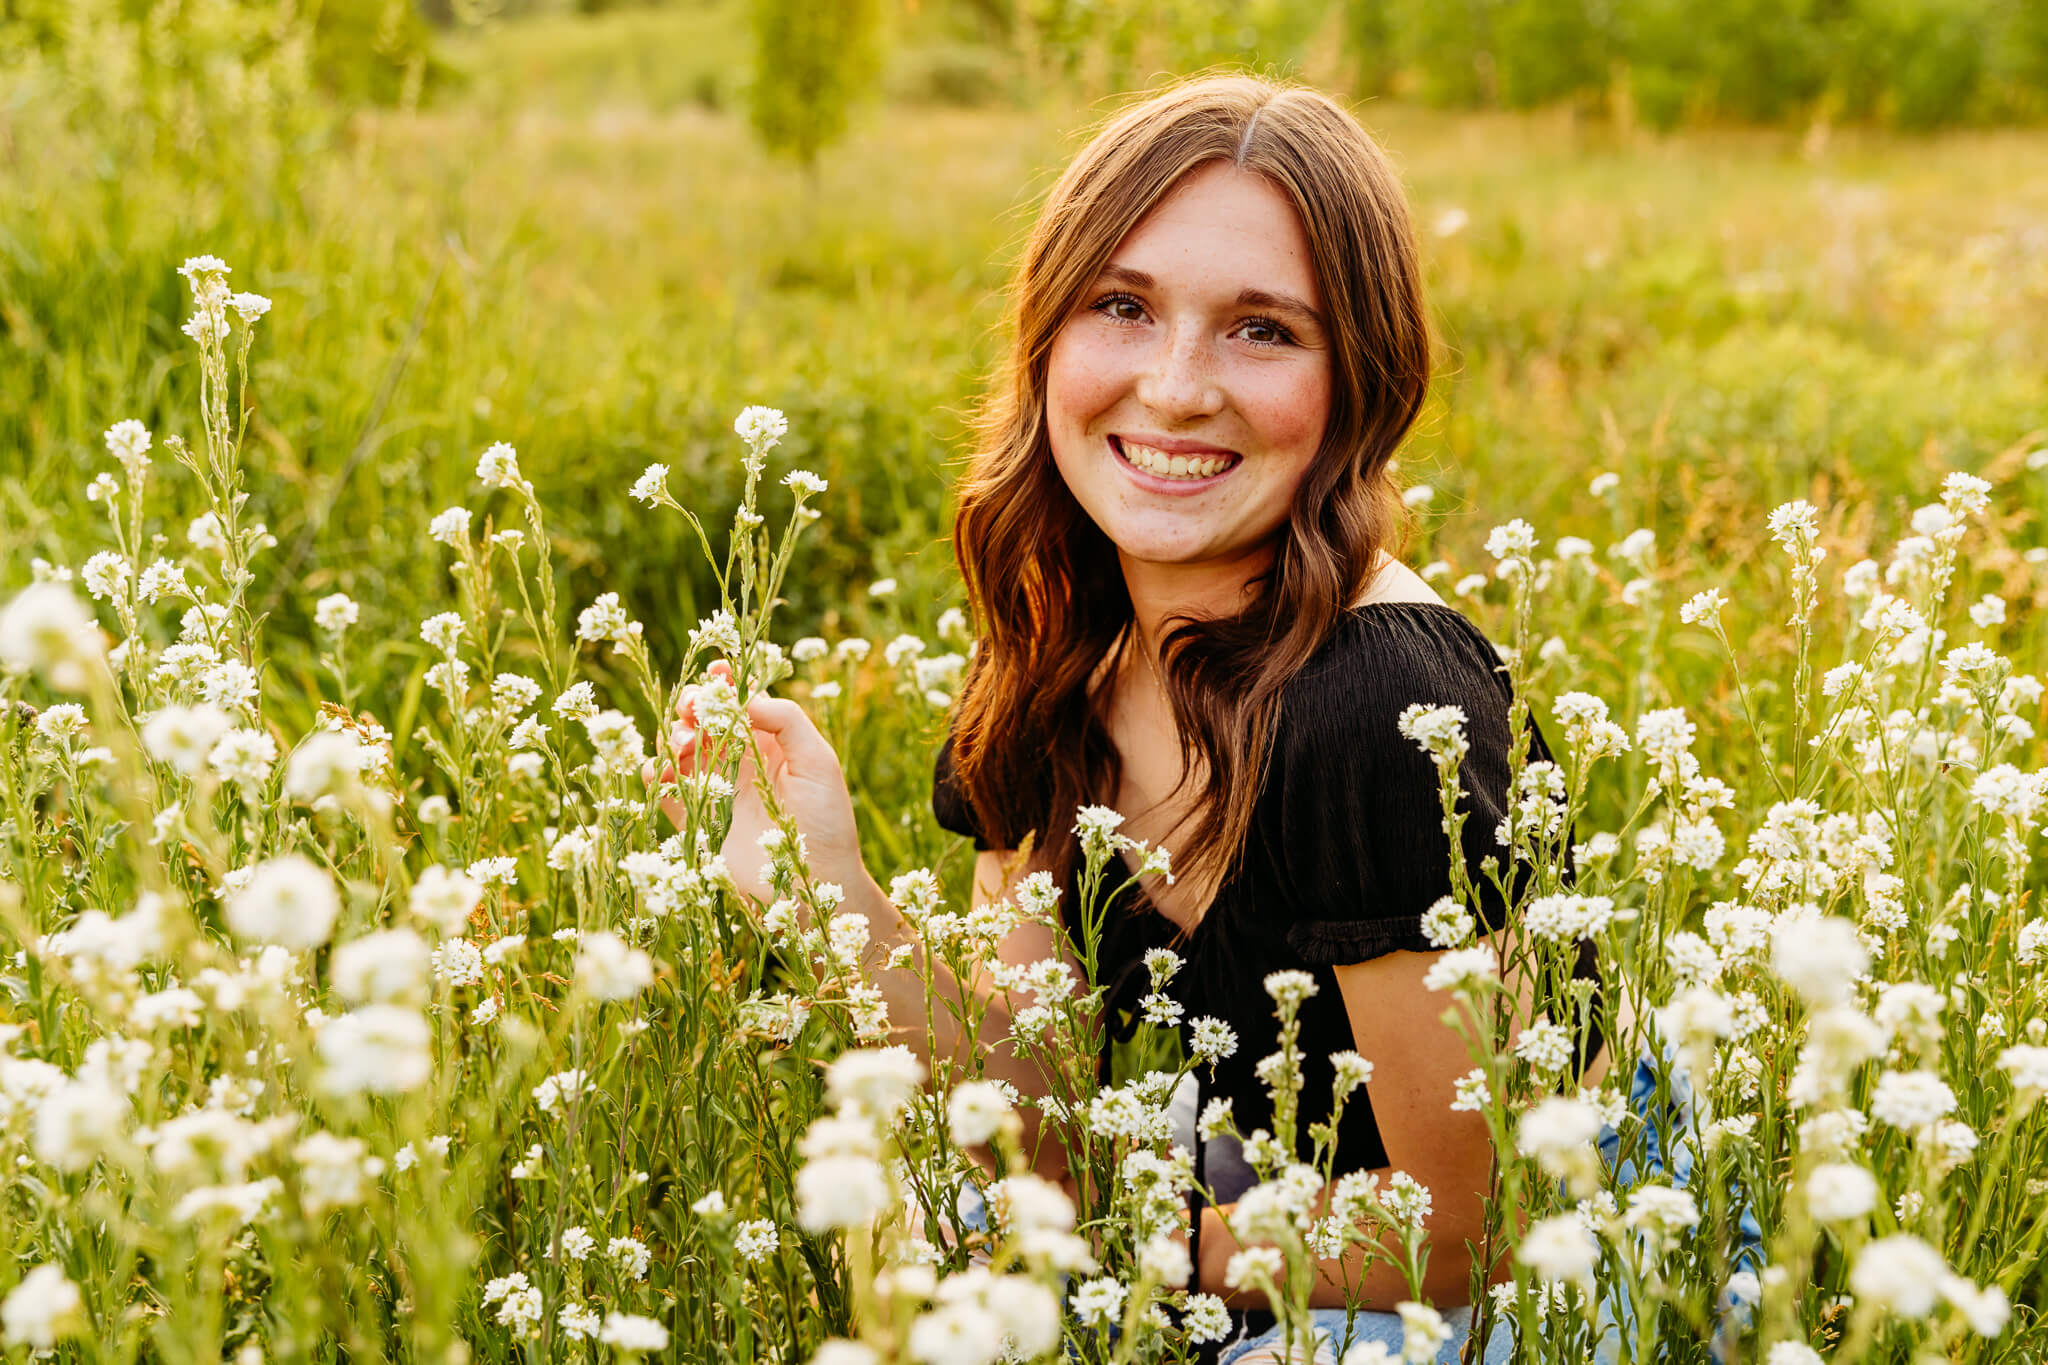 bay port high school senior girl sitting in a field of white flowers